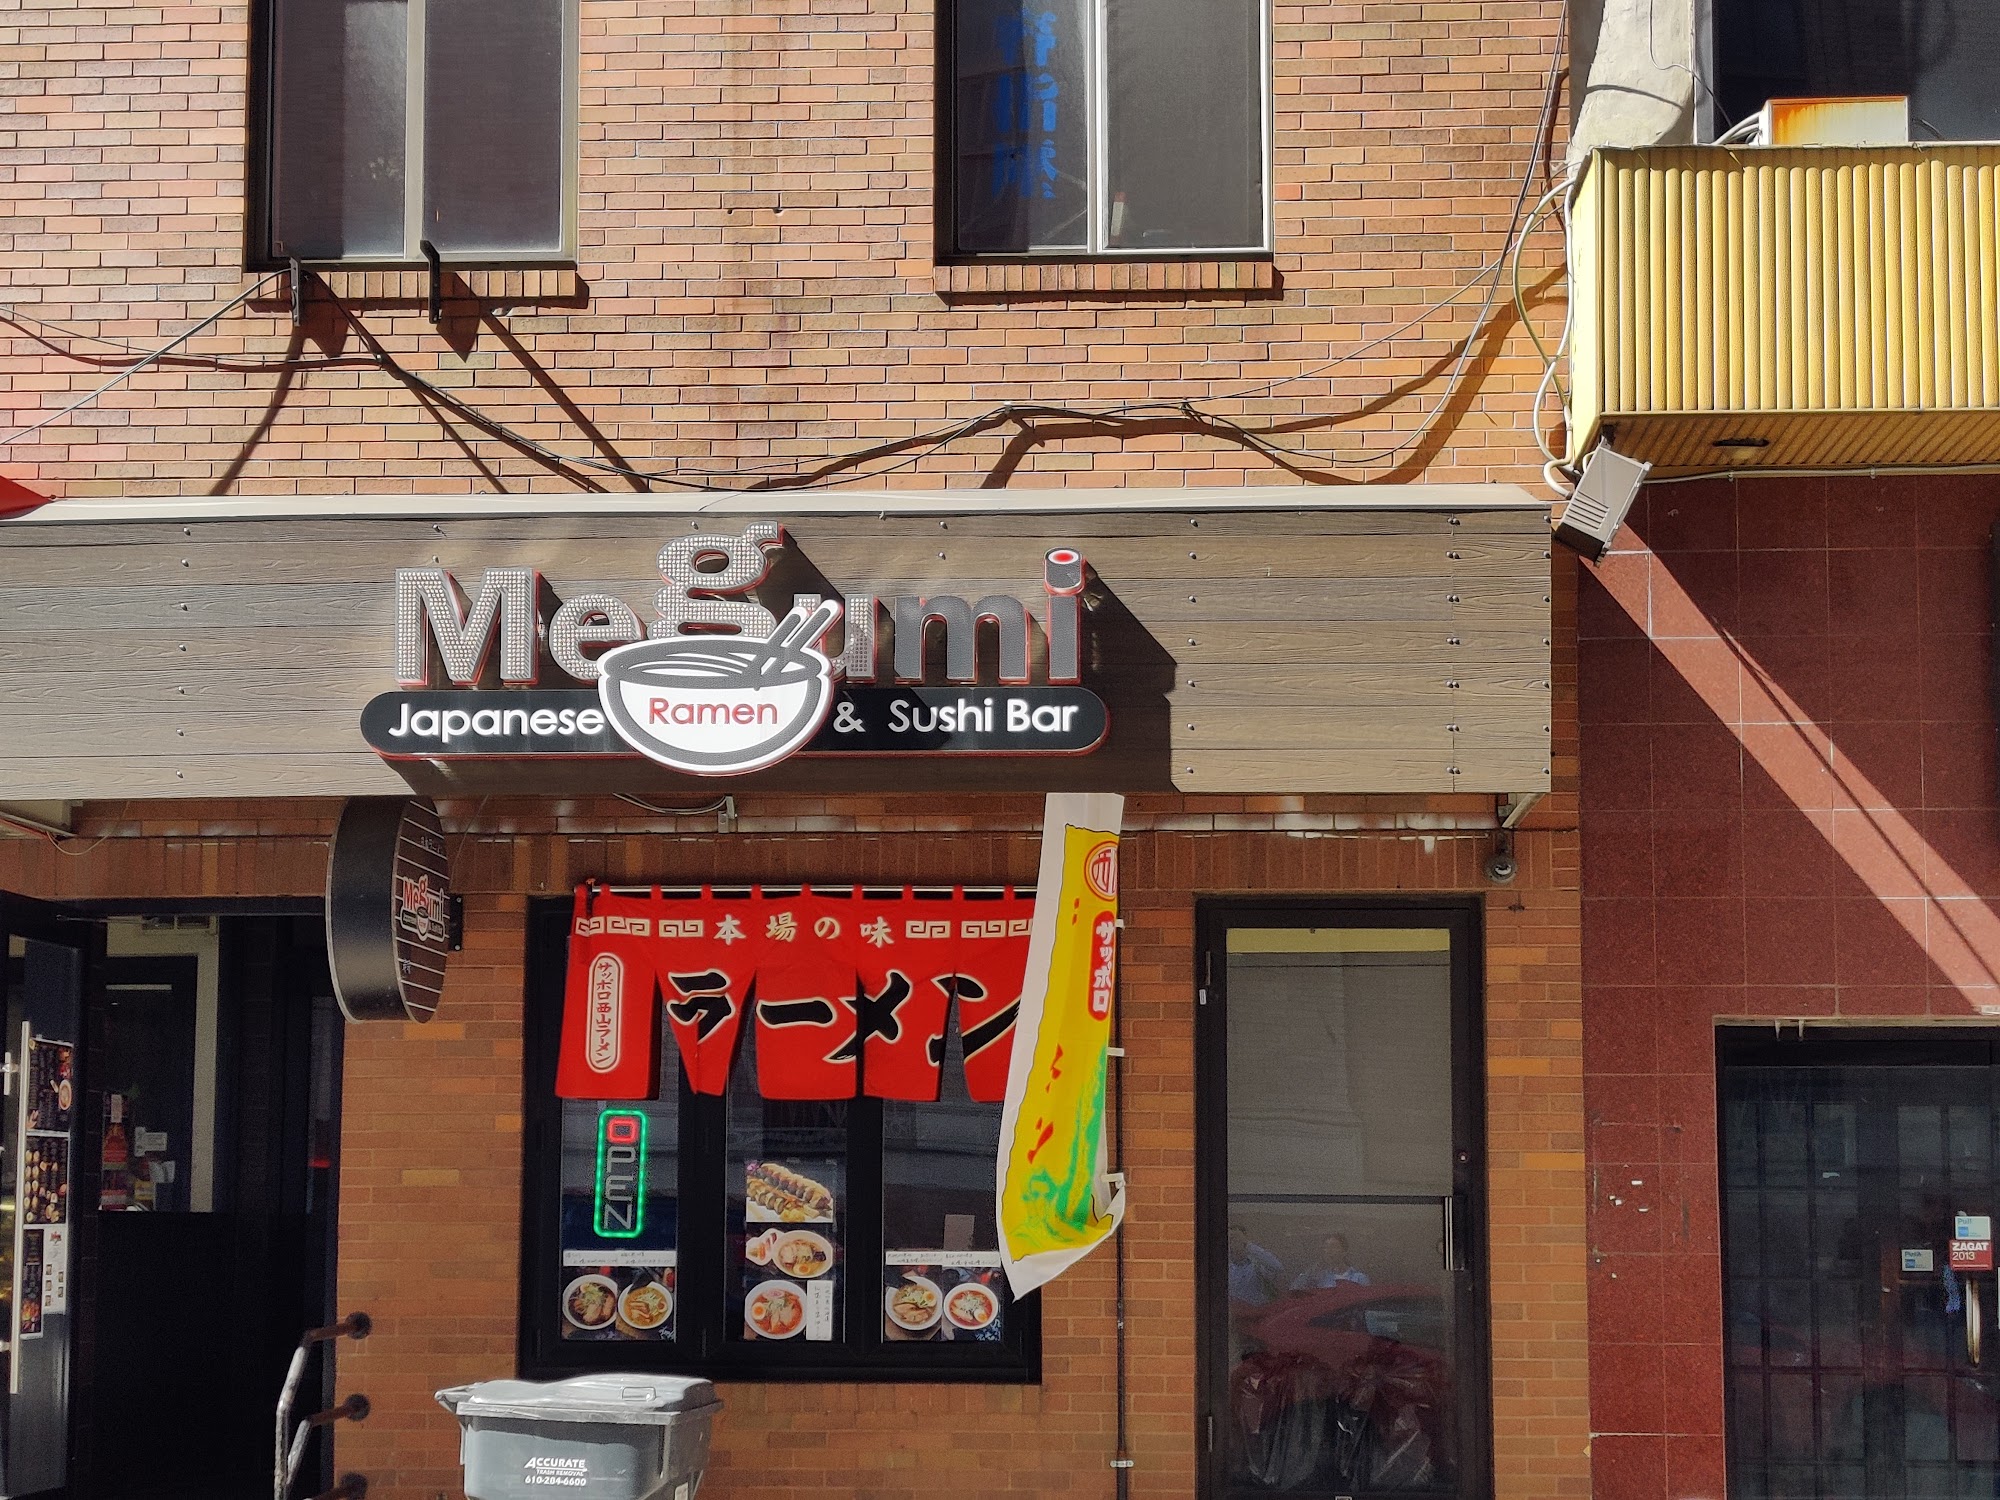 Megumi Japanese Ramen & Sushi Bar